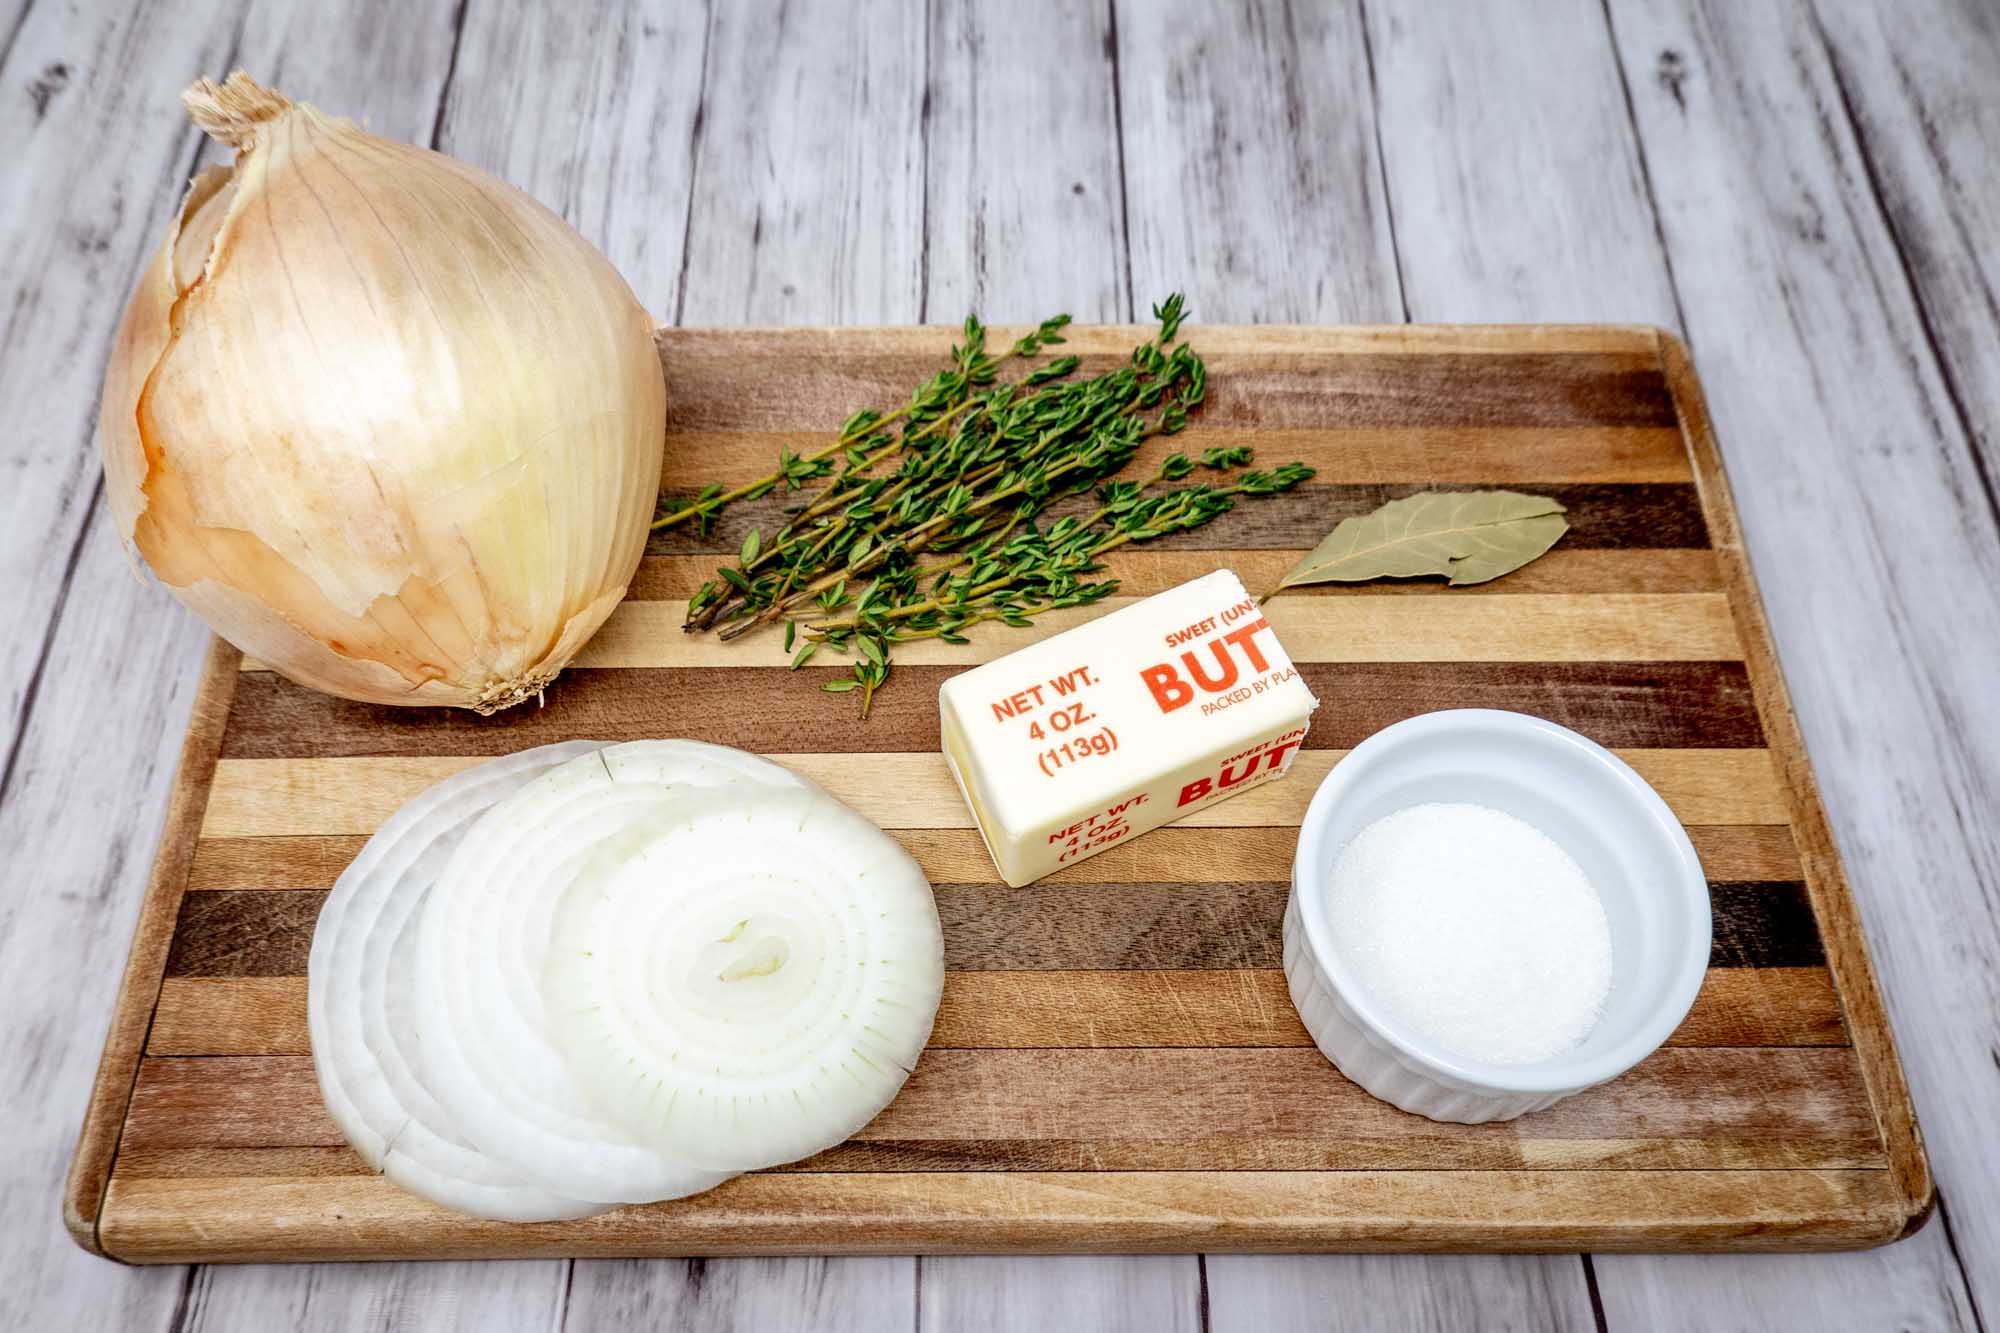 Onions, butter, thyme sprigs, sugar, and a bay leaf on a cutting board